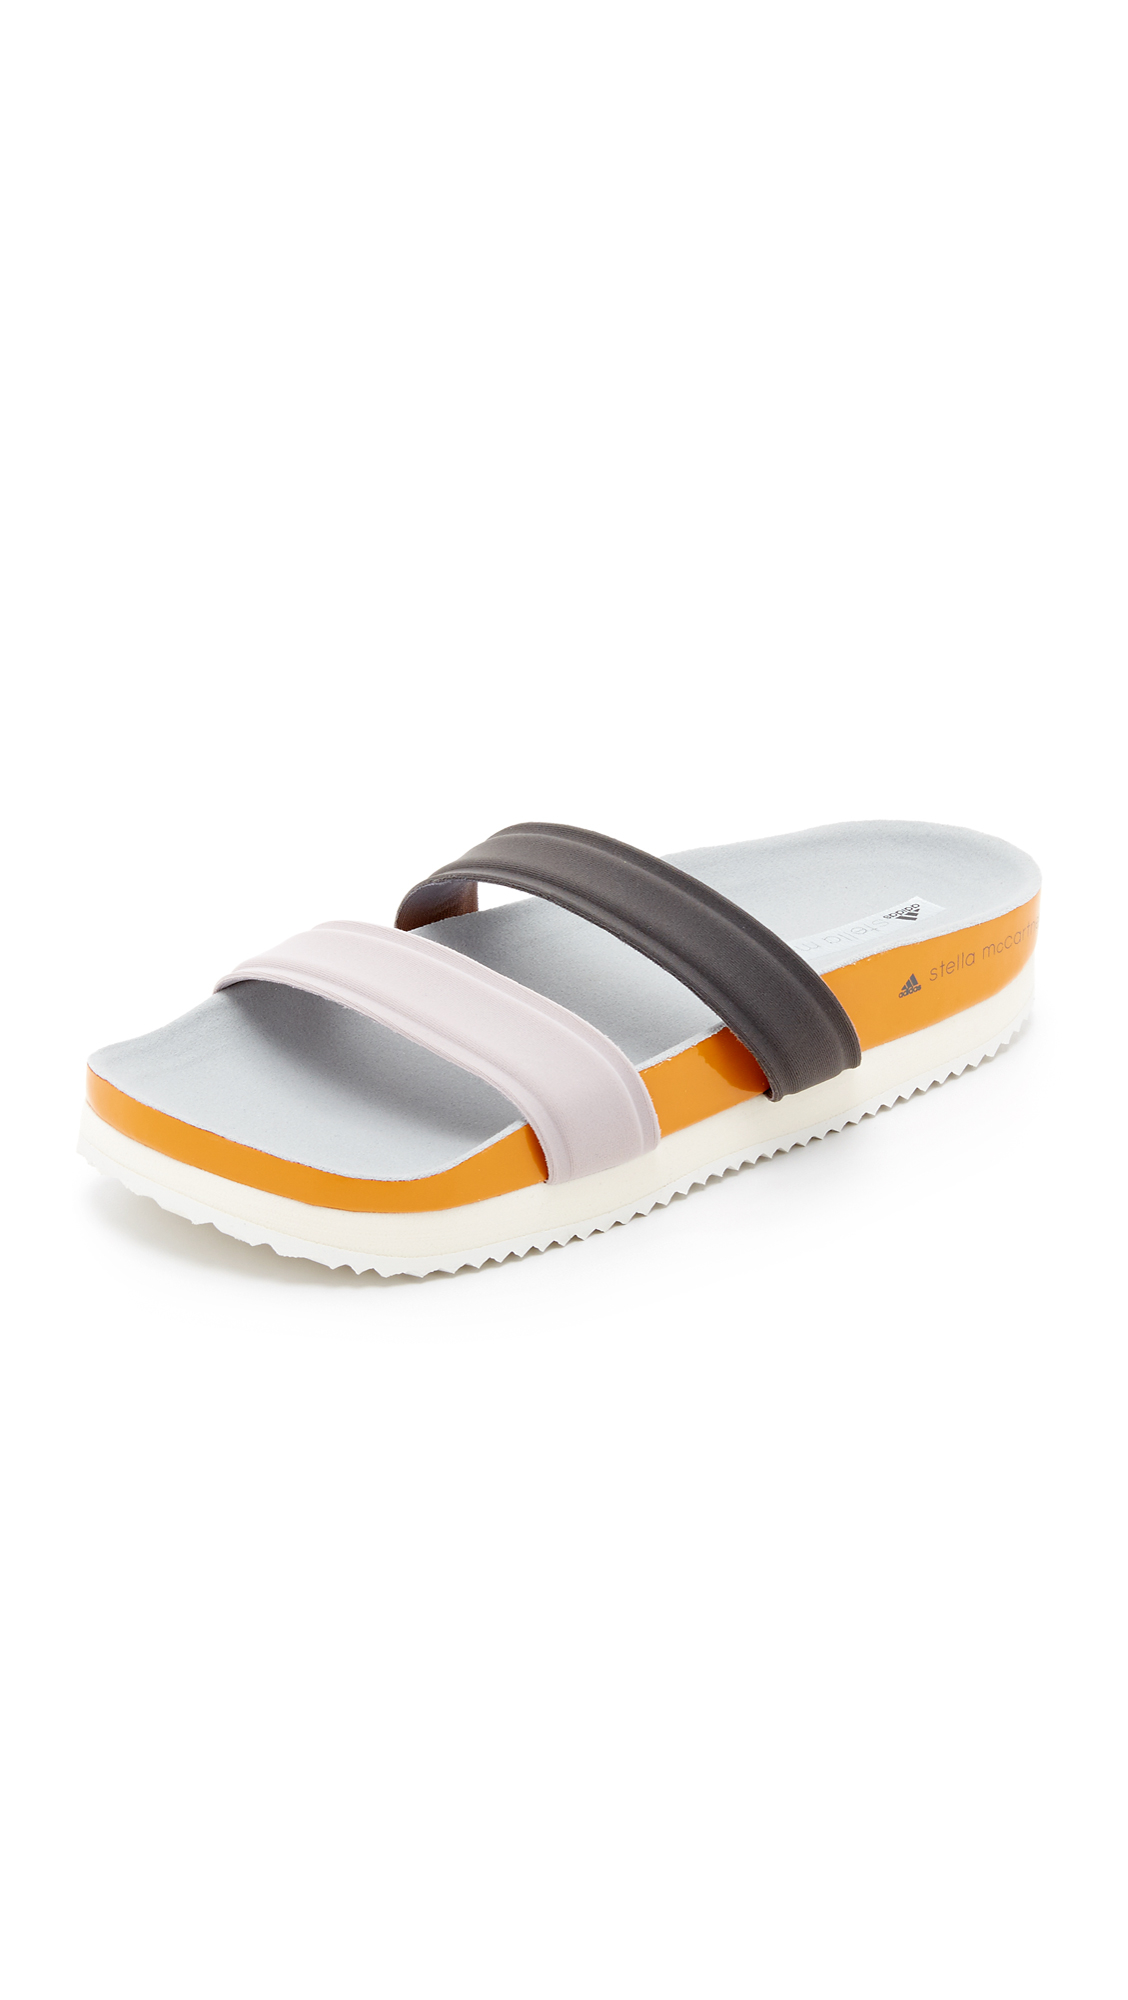 adidas By Stella McCartney Diadophis Slide Sandals in White - Lyst